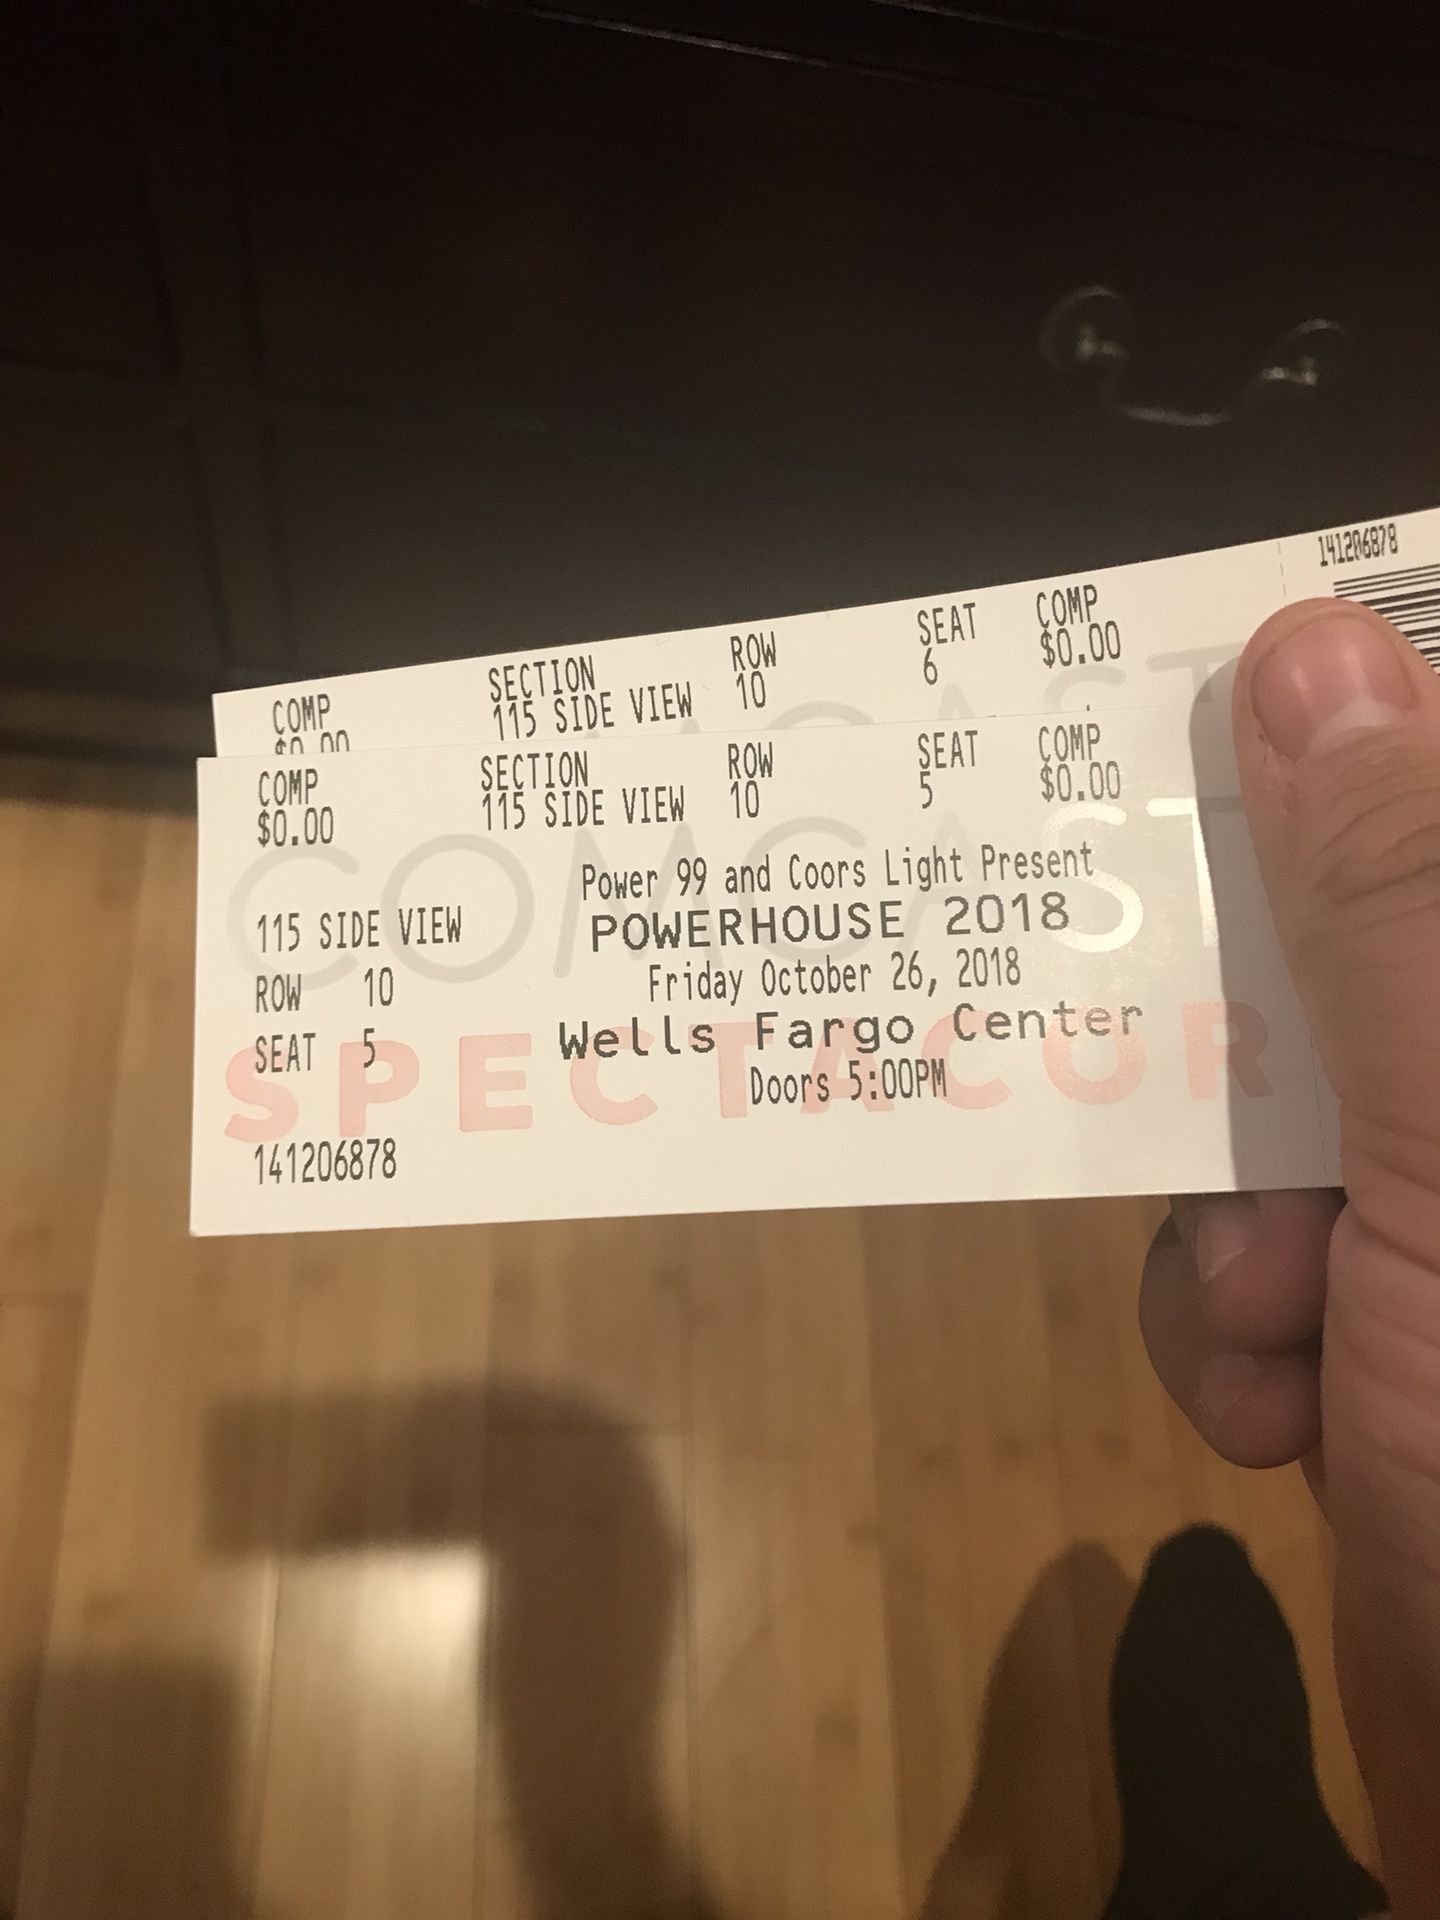 Powerhouse Tickets!!!